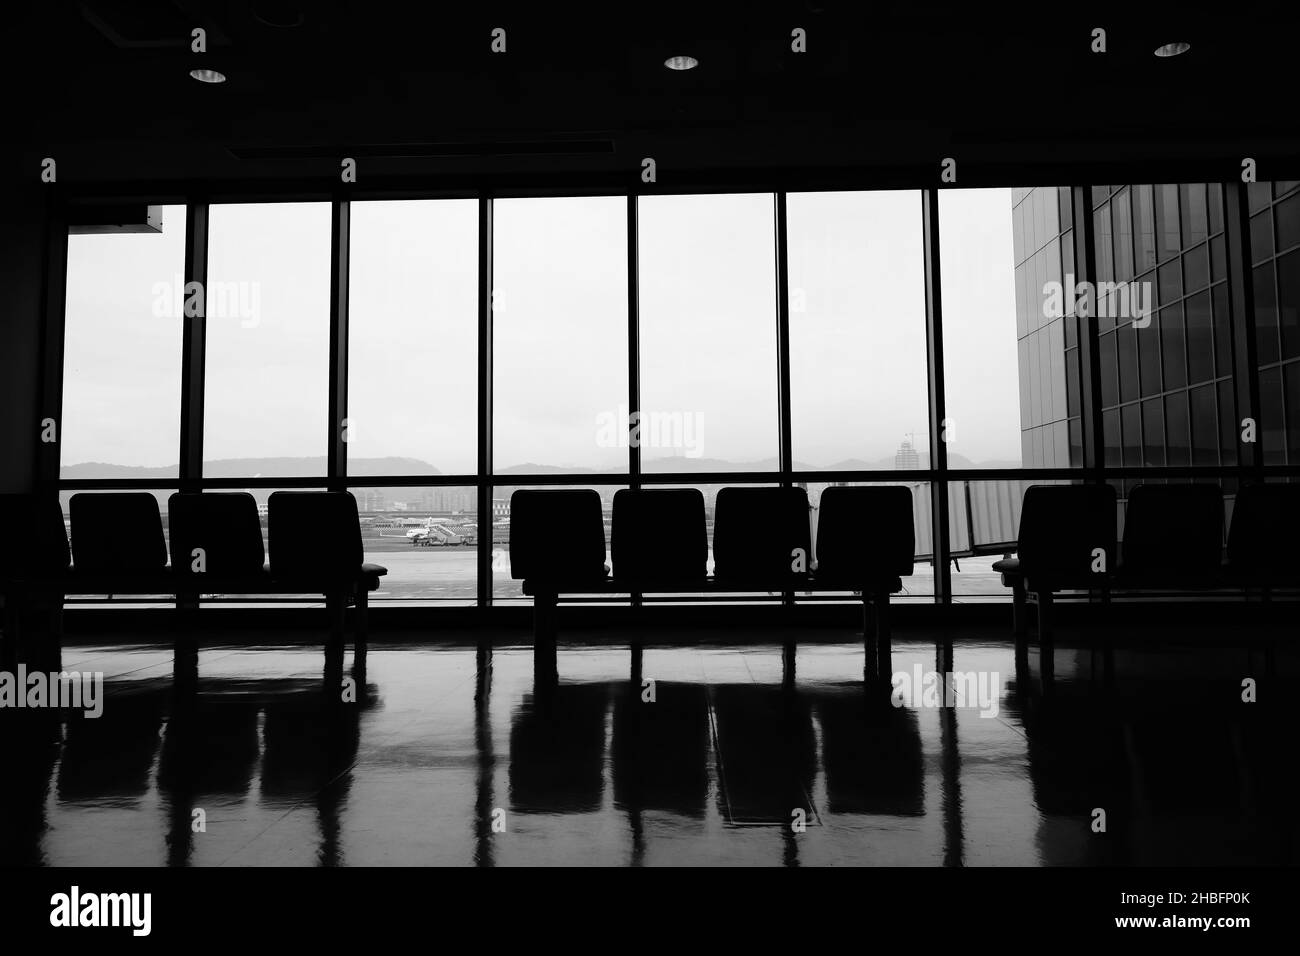 Waiting room of the Taipei Songshan Airport at Taiwan Stock Photo